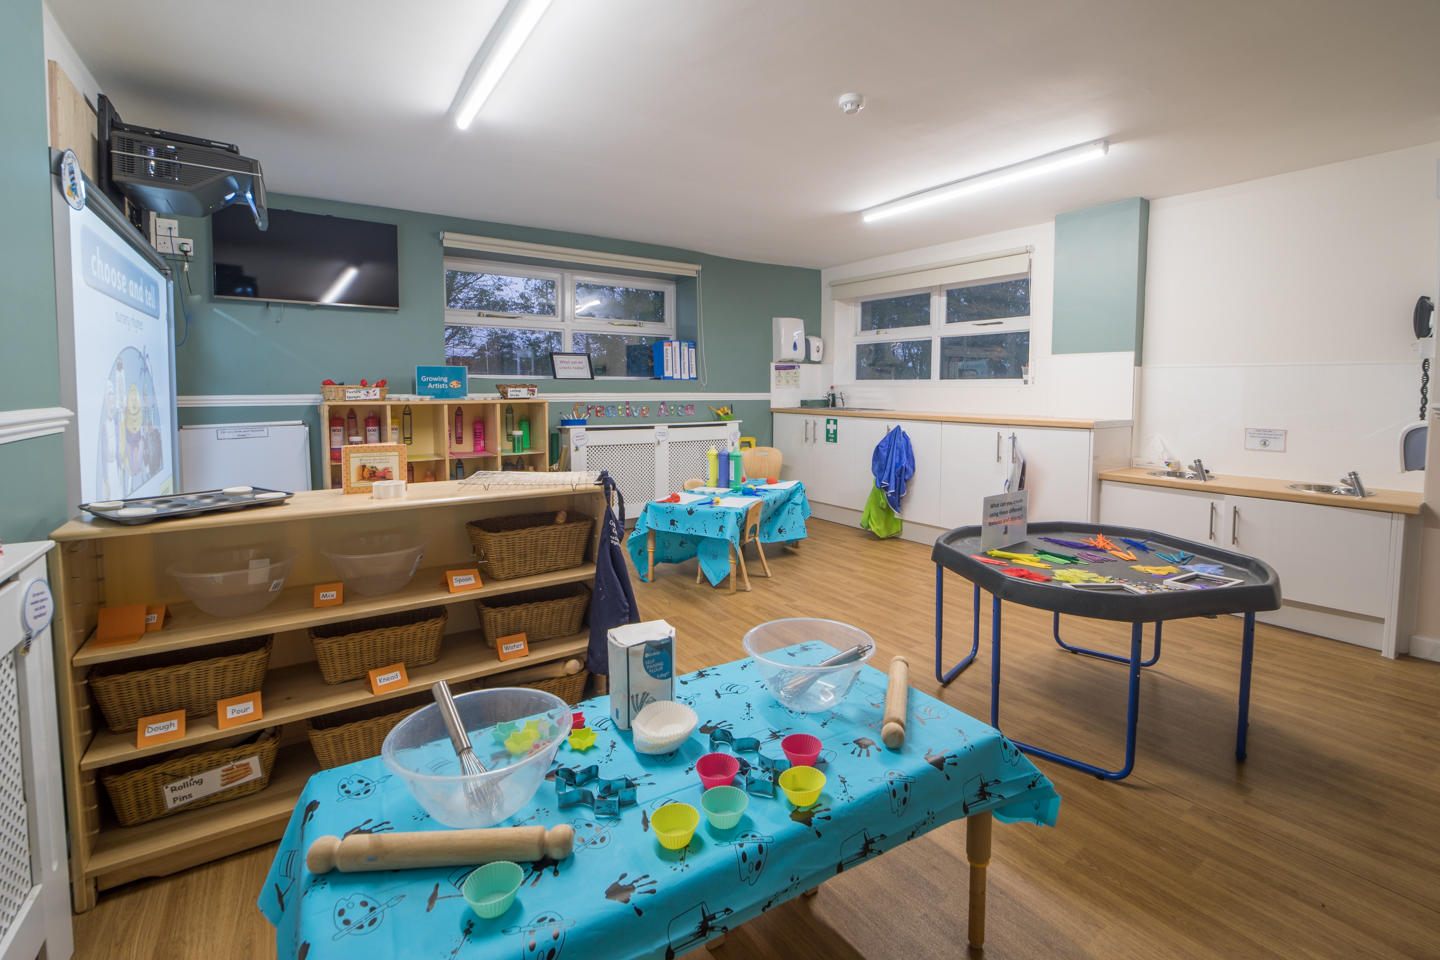 Bright Horizons Prestbury Day Nursery and Preschool Macclesfield 03334 553357